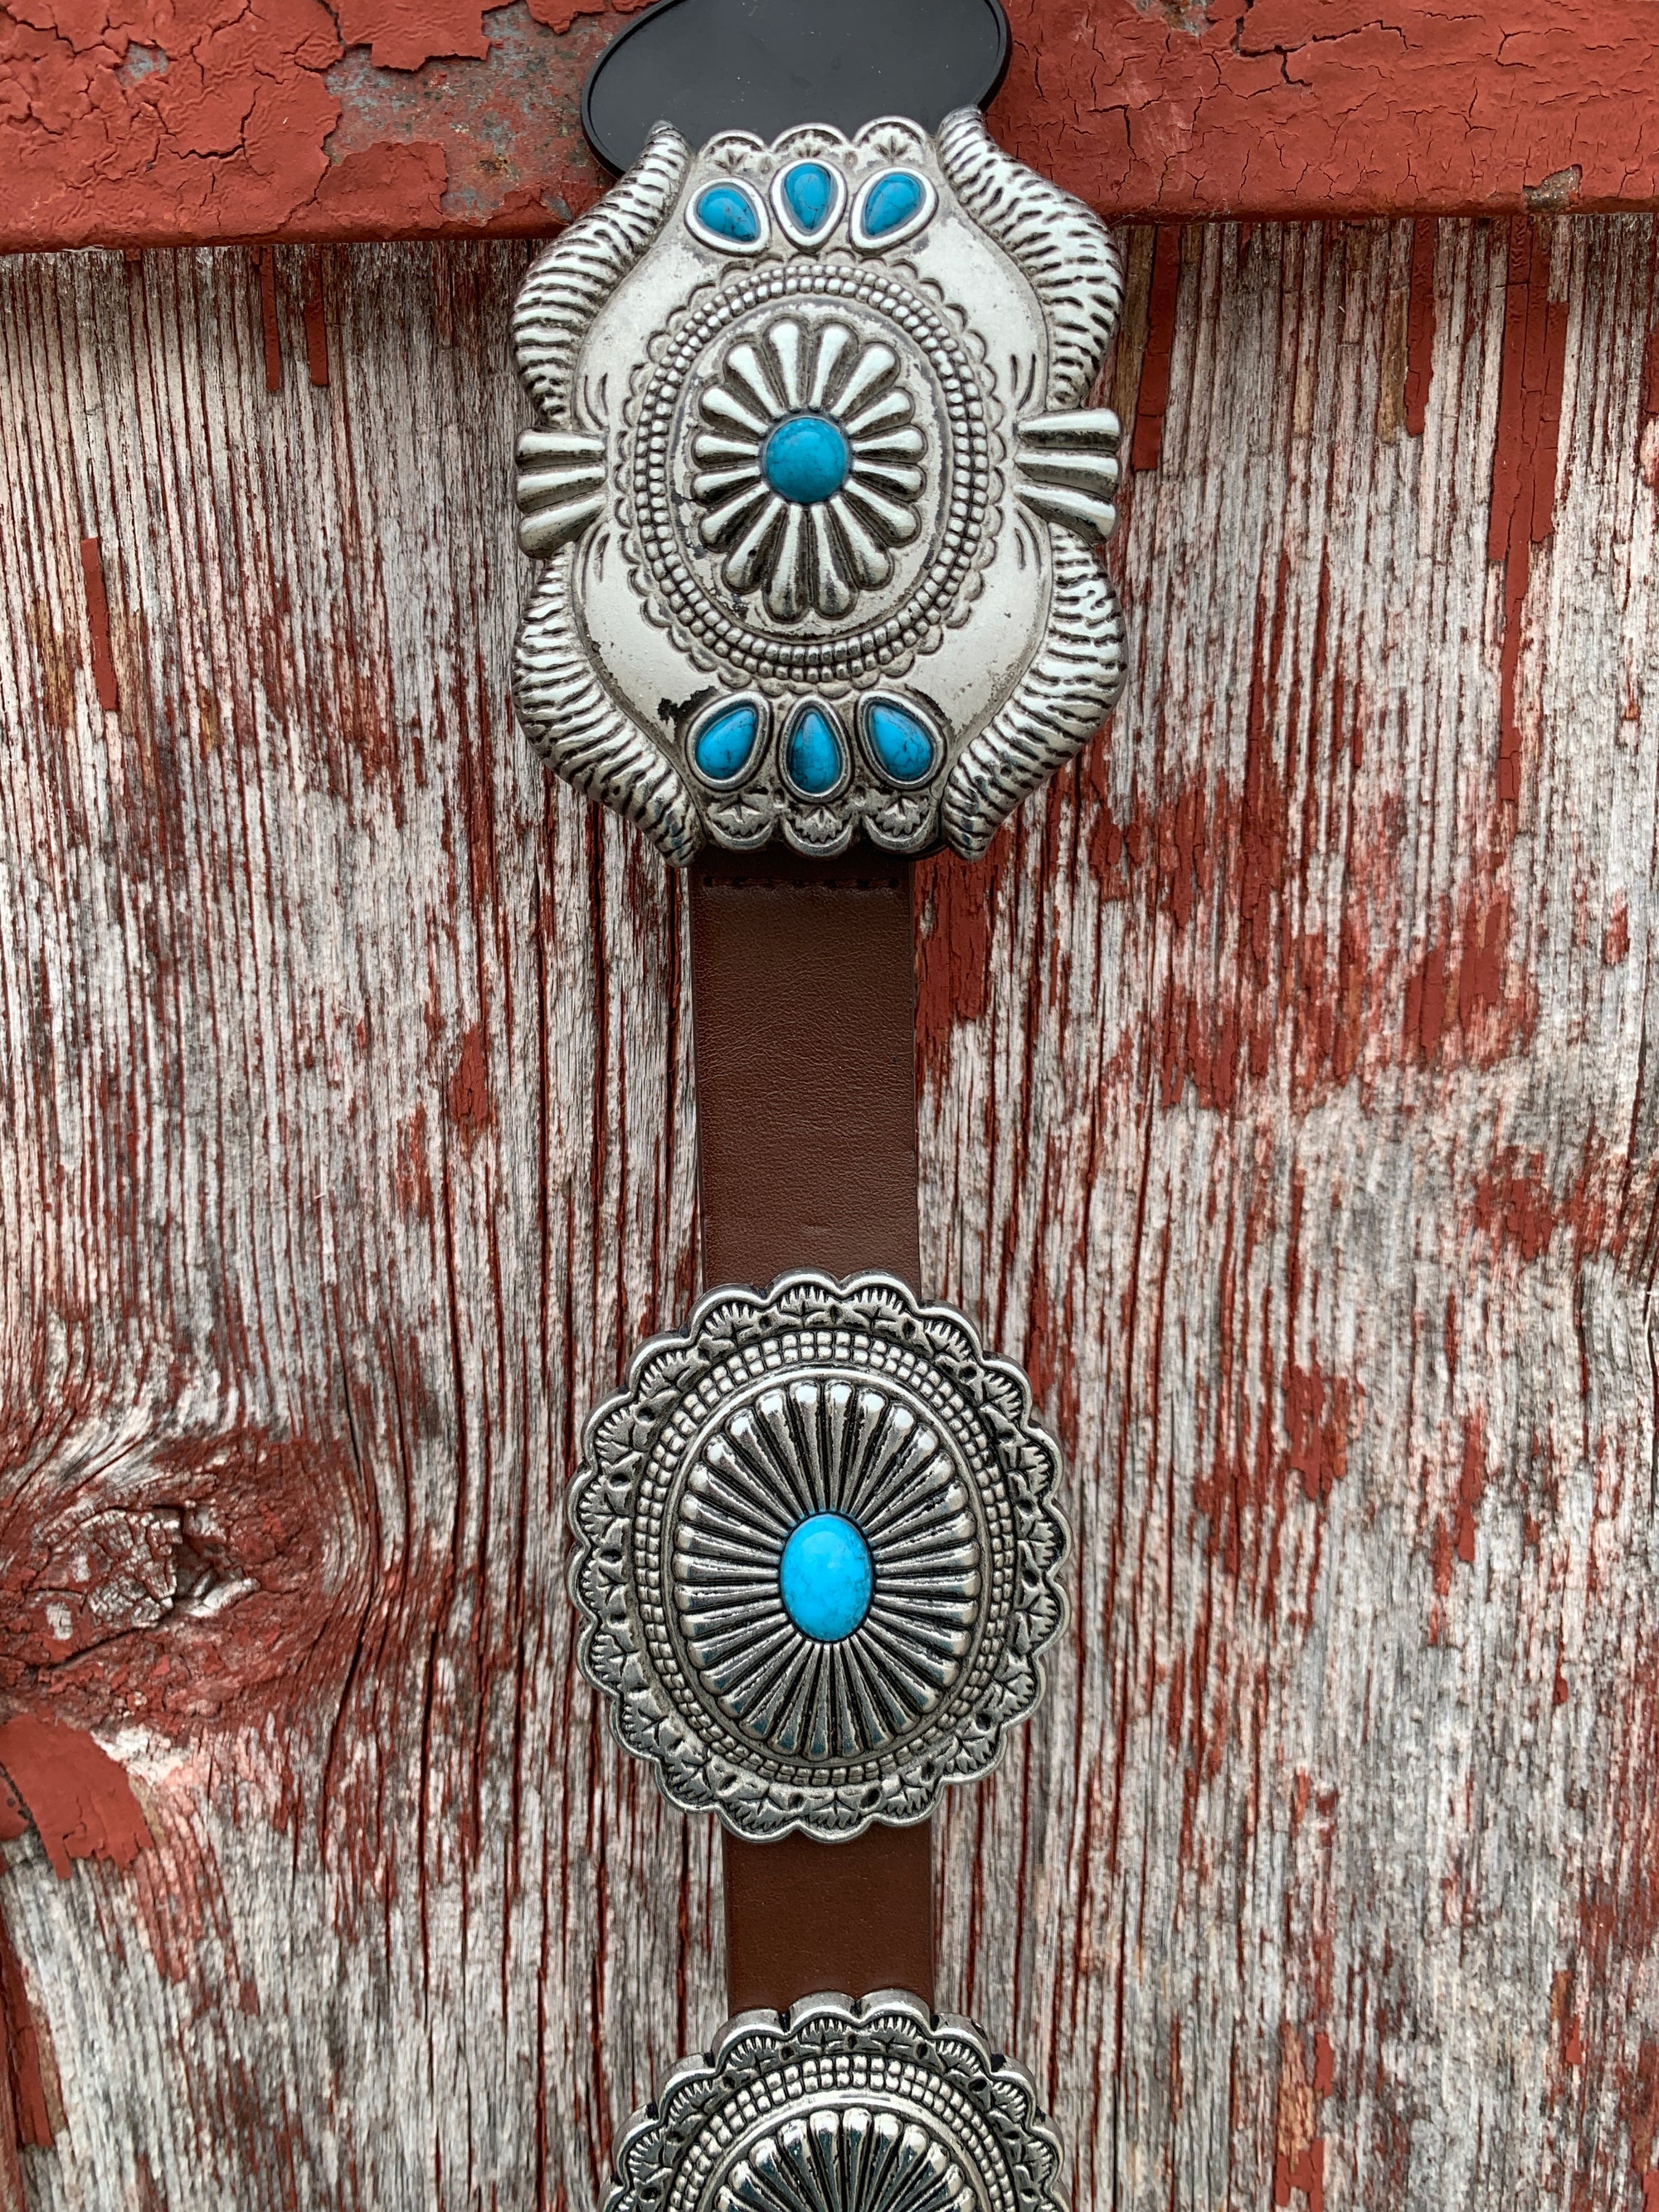 Santa Fe Turquoise Concho Belt